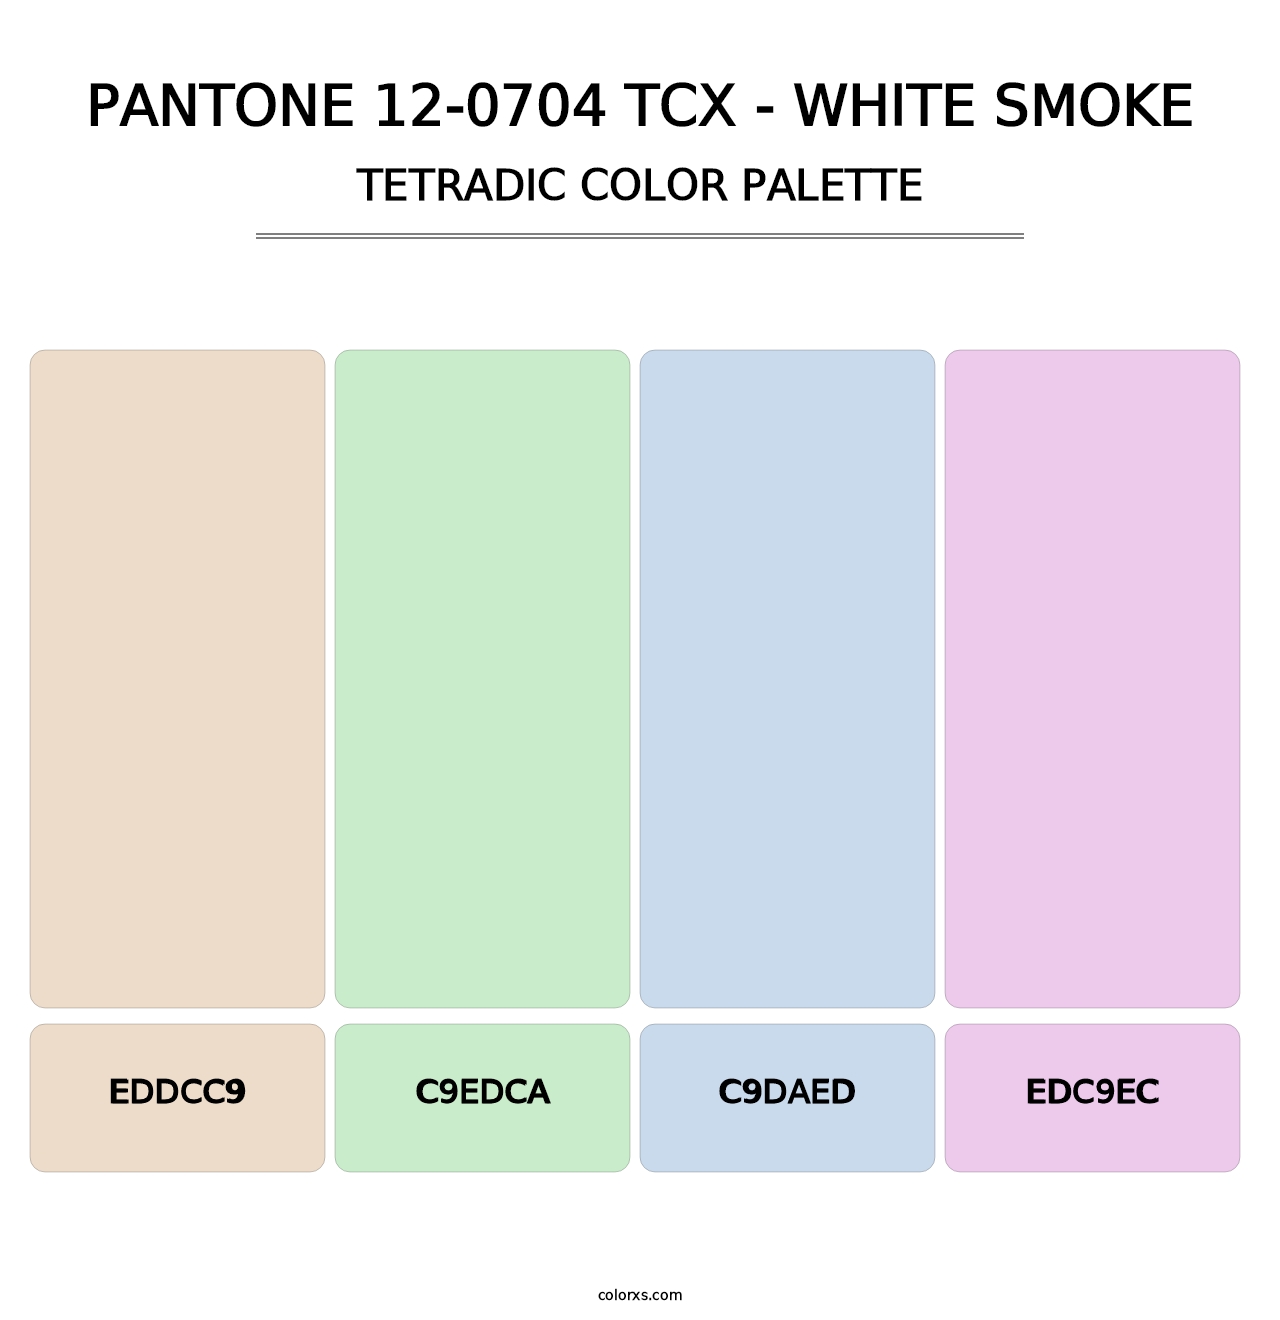 PANTONE 12-0704 TCX - White Smoke - Tetradic Color Palette